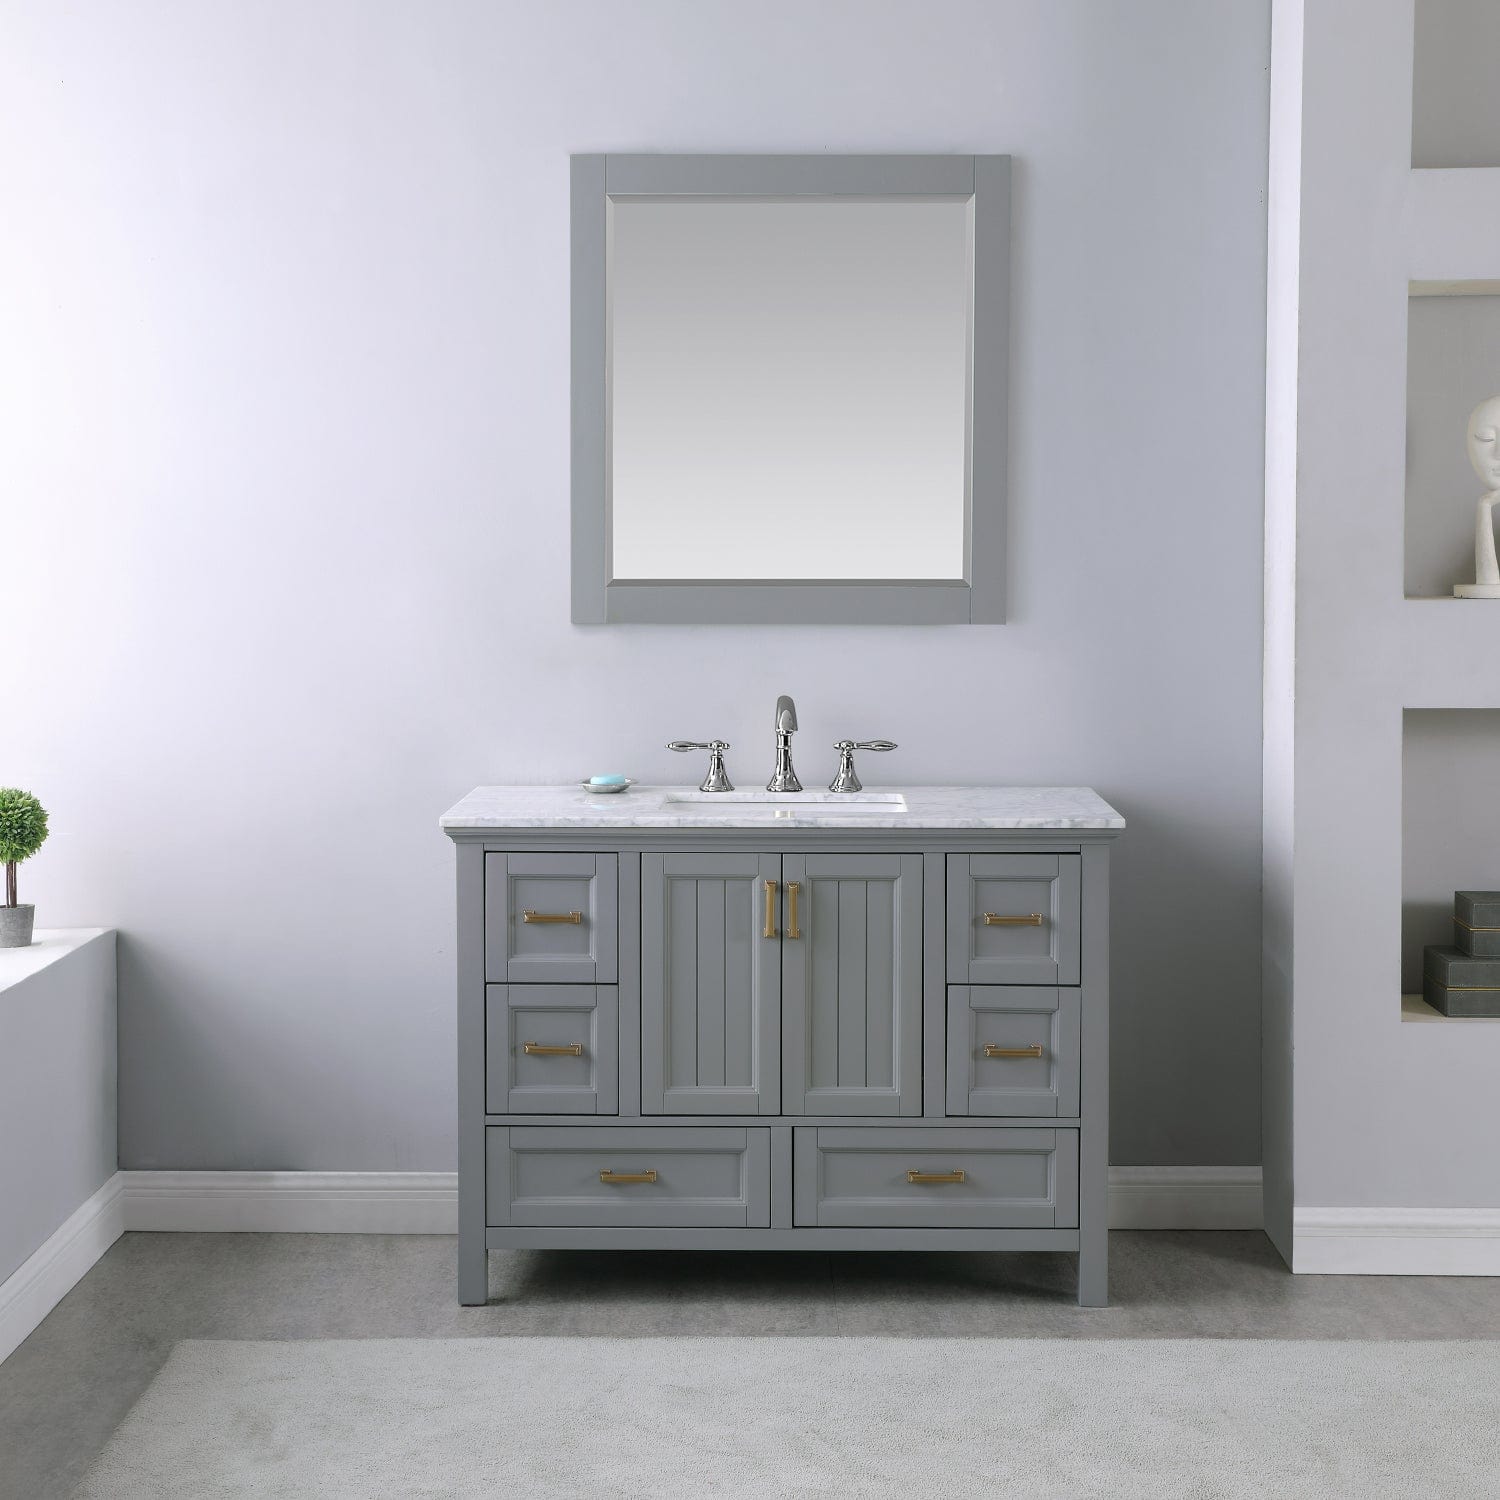 Altair Isla 48" Single Bathroom Vanity Set in Gray and Carrara White Marble Countertop with Mirror 538048-GR-CA - Molaix631112970839Vanity538048-GR-CA